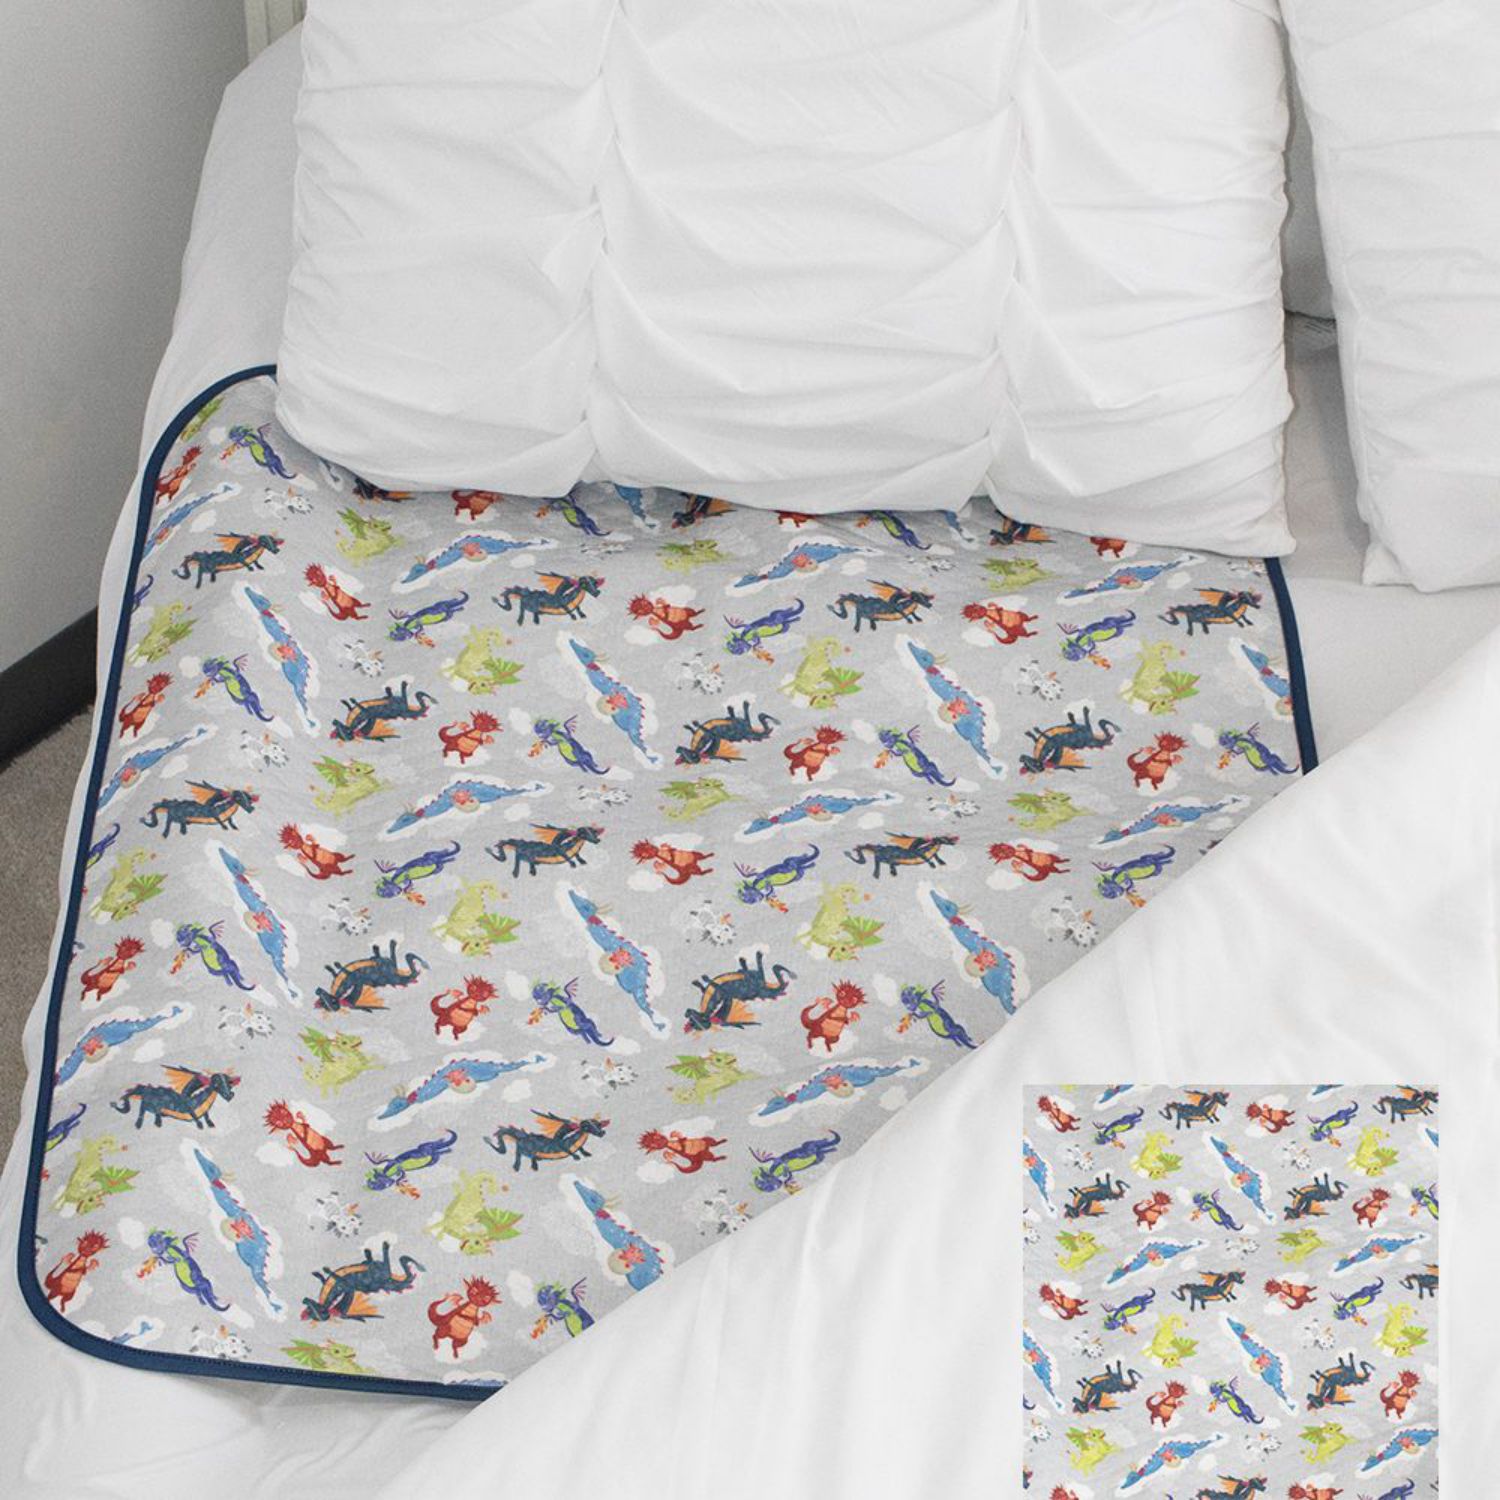 Smart Bottoms waterproof mattress pad